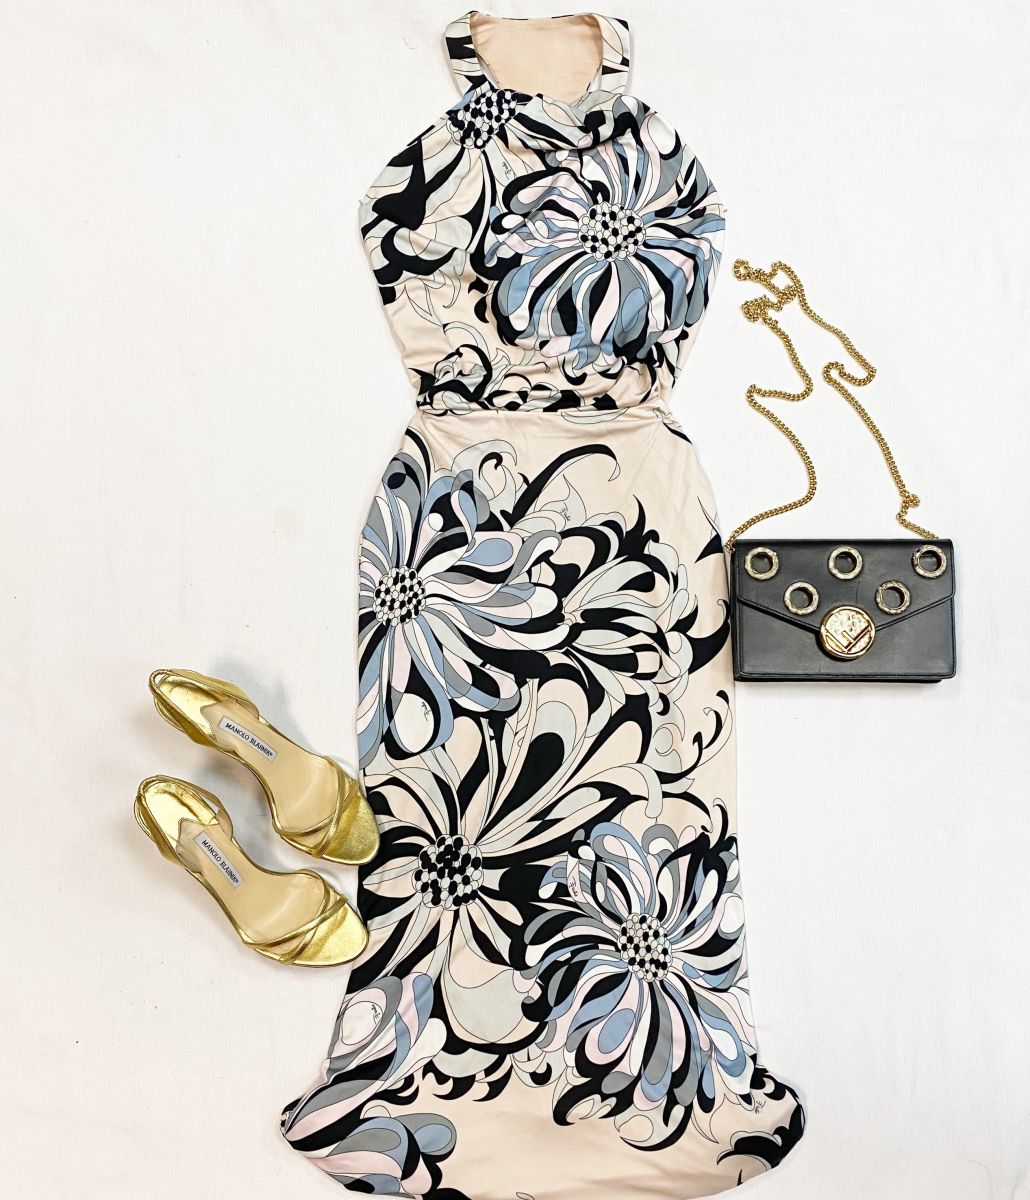 Платье Emilio Pucci размер 40 цена 12 308 руб
Босоножки Manolo Blahnik размер 40 цена 18 462 руб
Сумка Fendi 